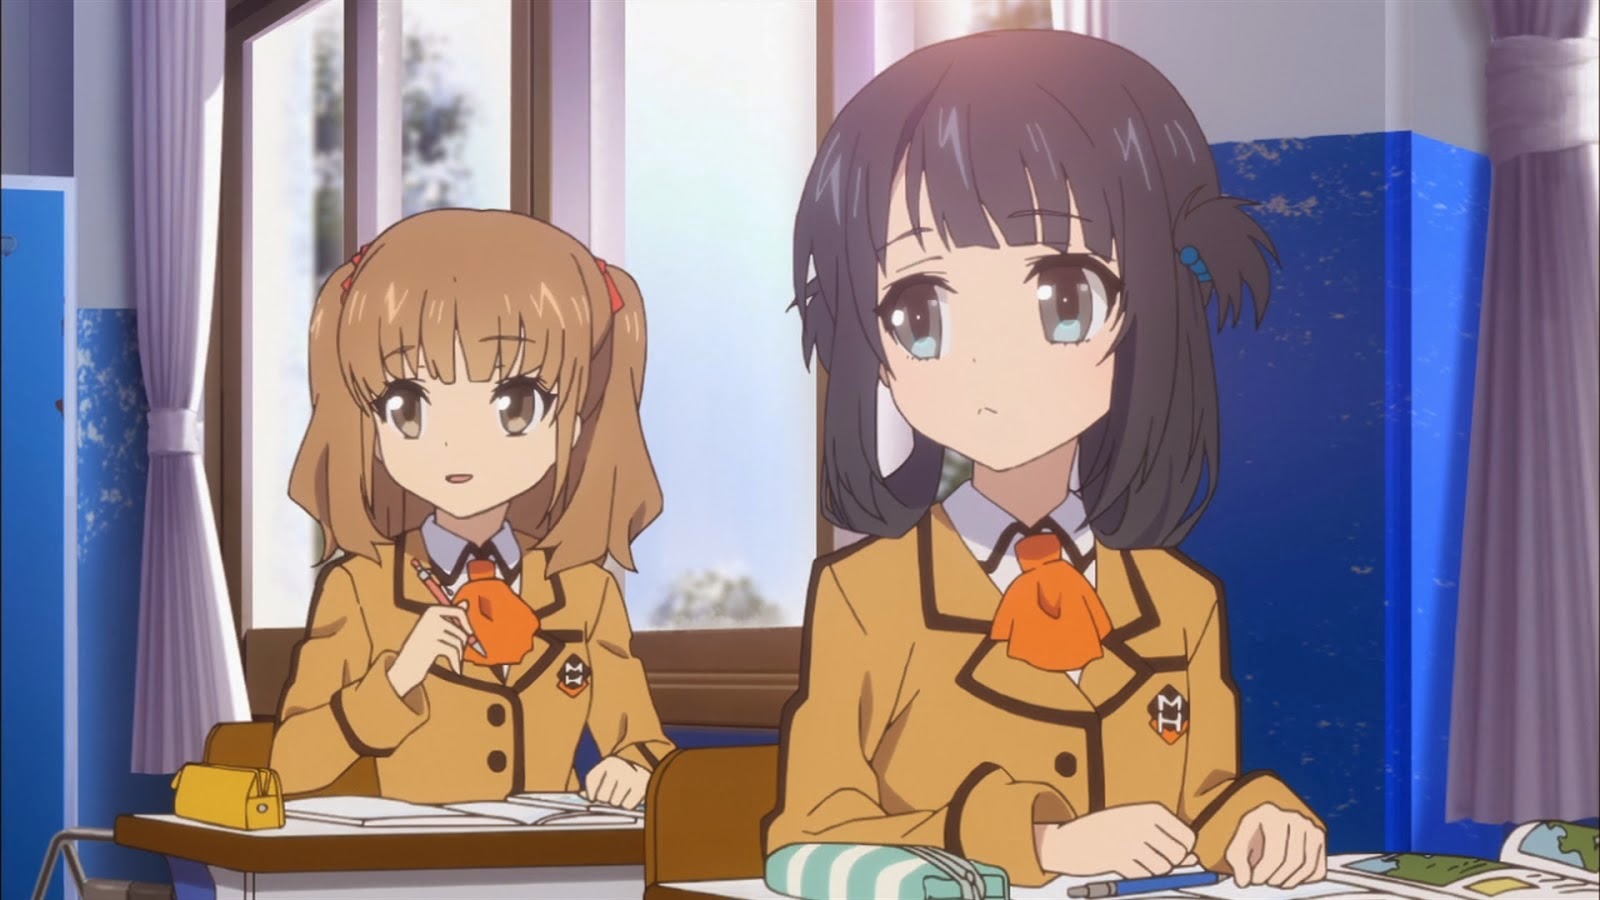 Nagi no Asukara - Episode 1 - Prejudice and Menaka's Faithful Encounter -  Chikorita157's Anime Blog